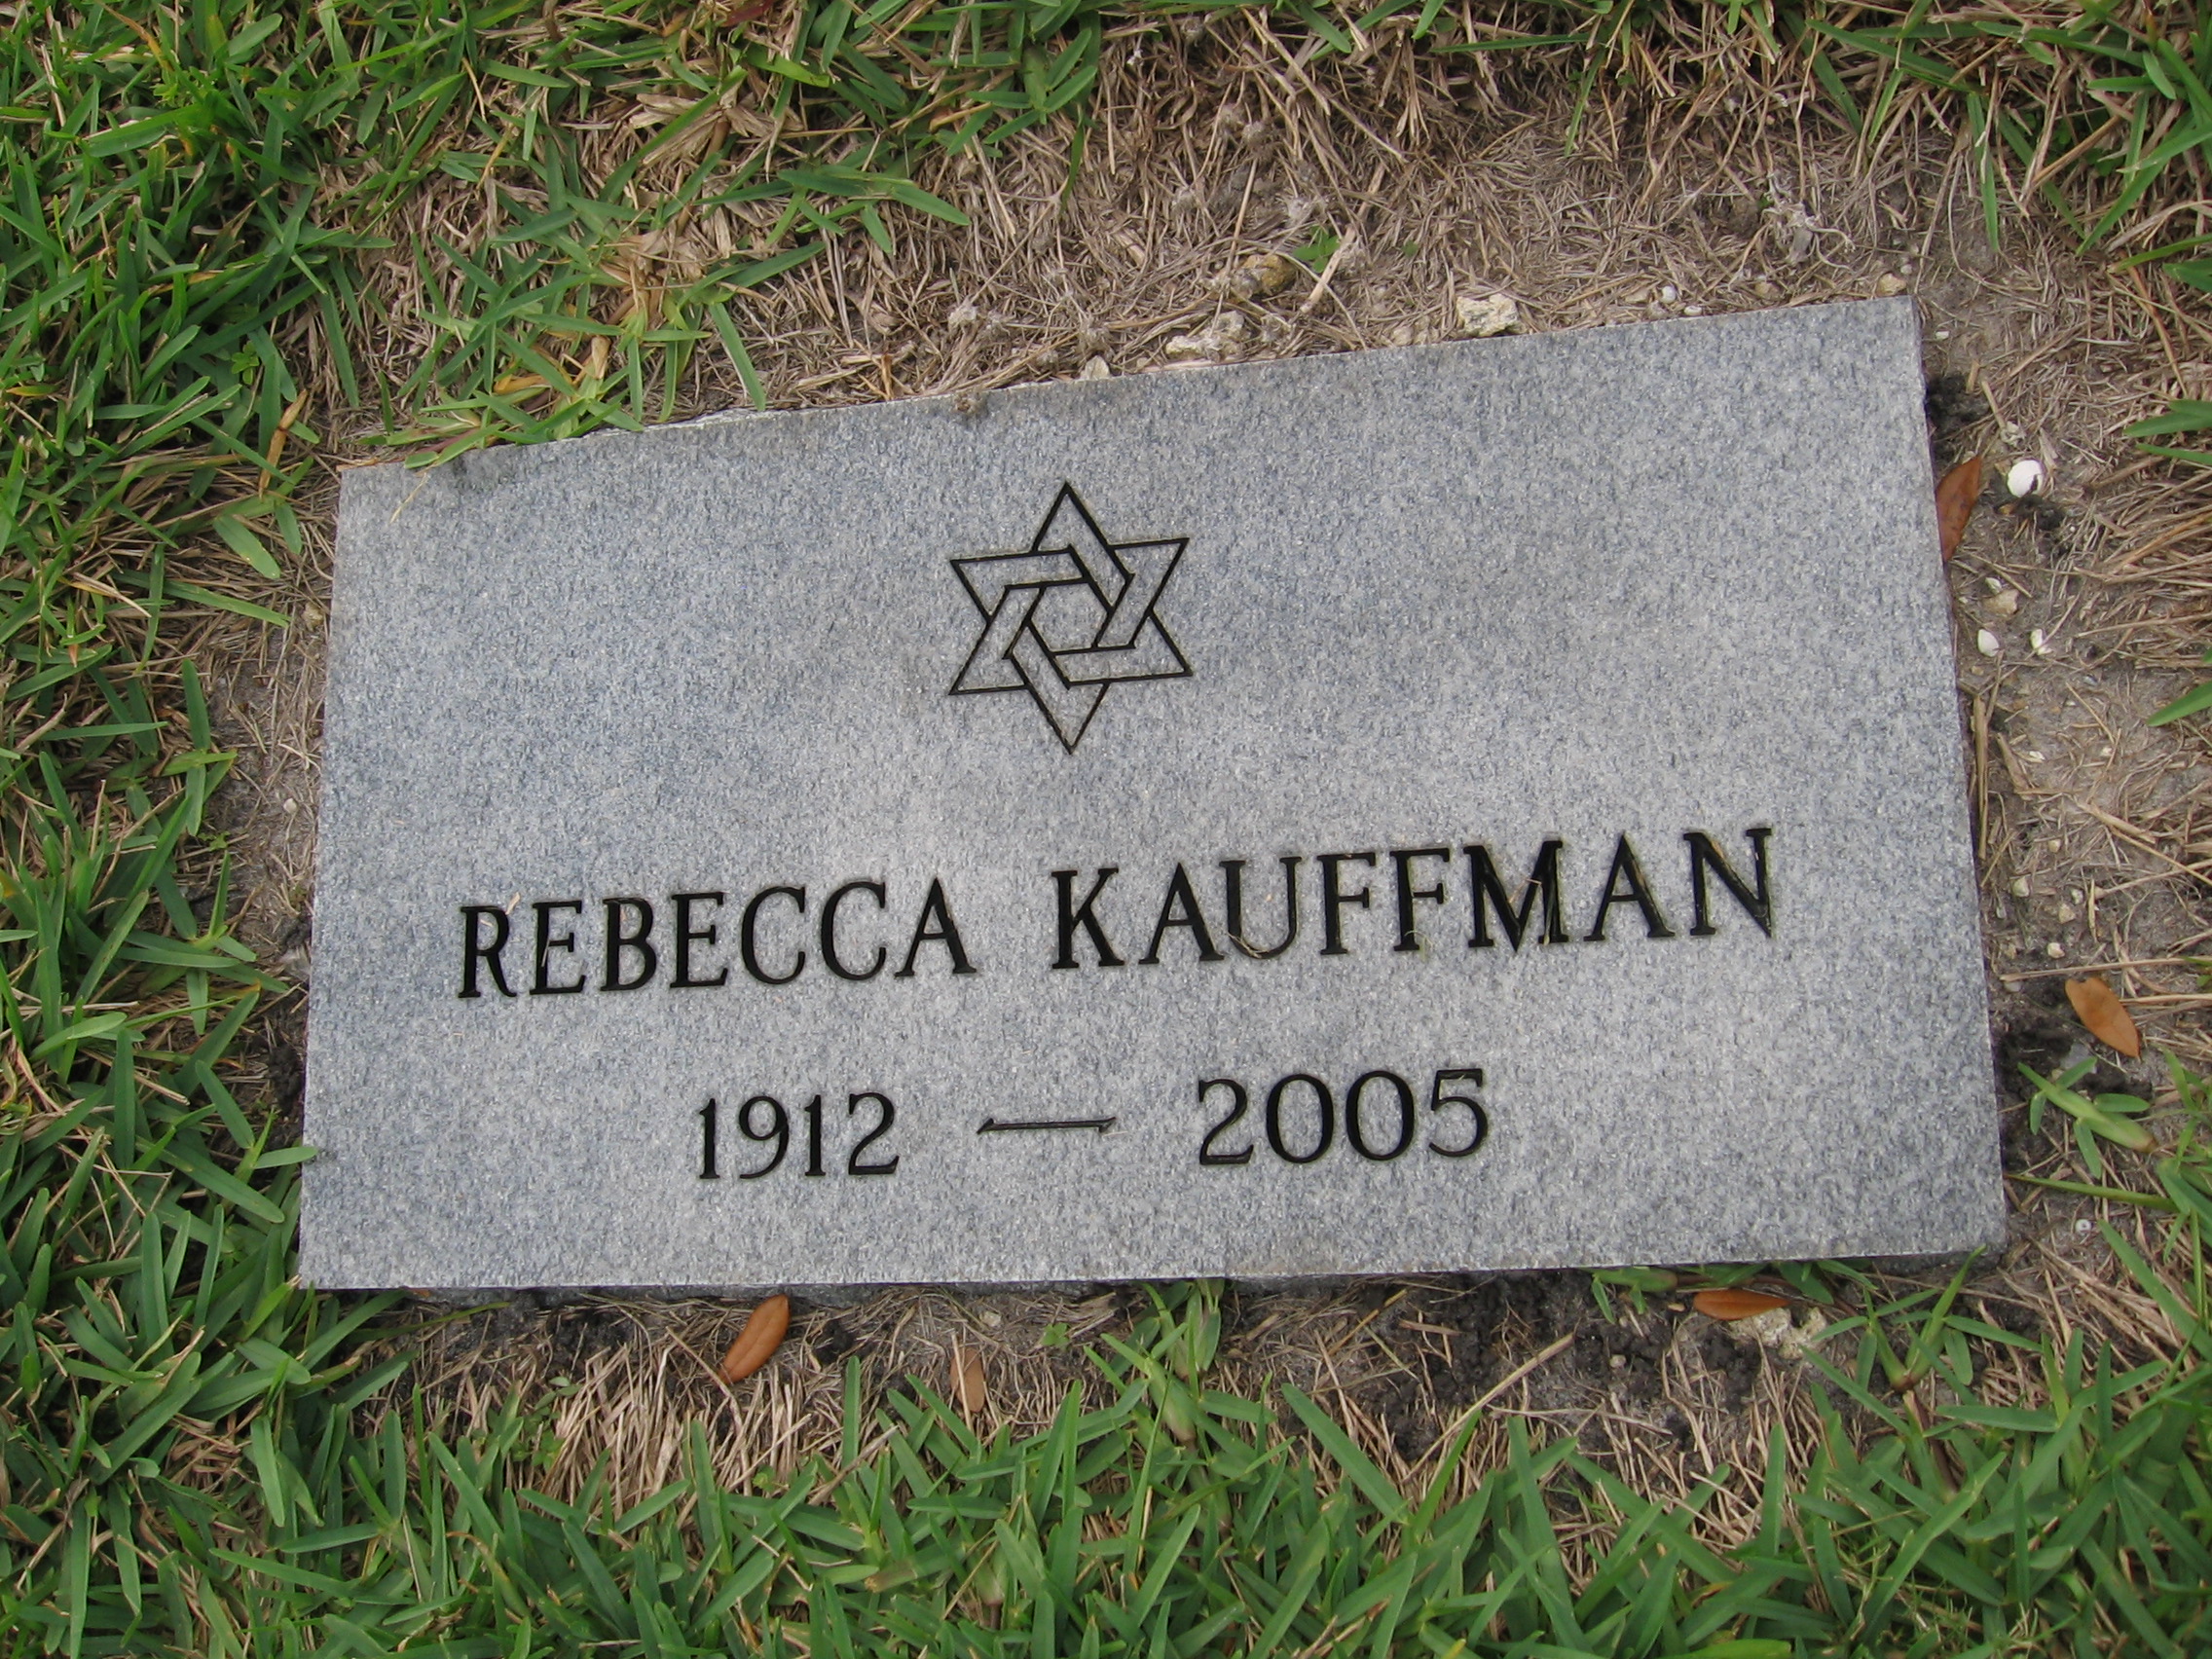 Rebecca Kauffman